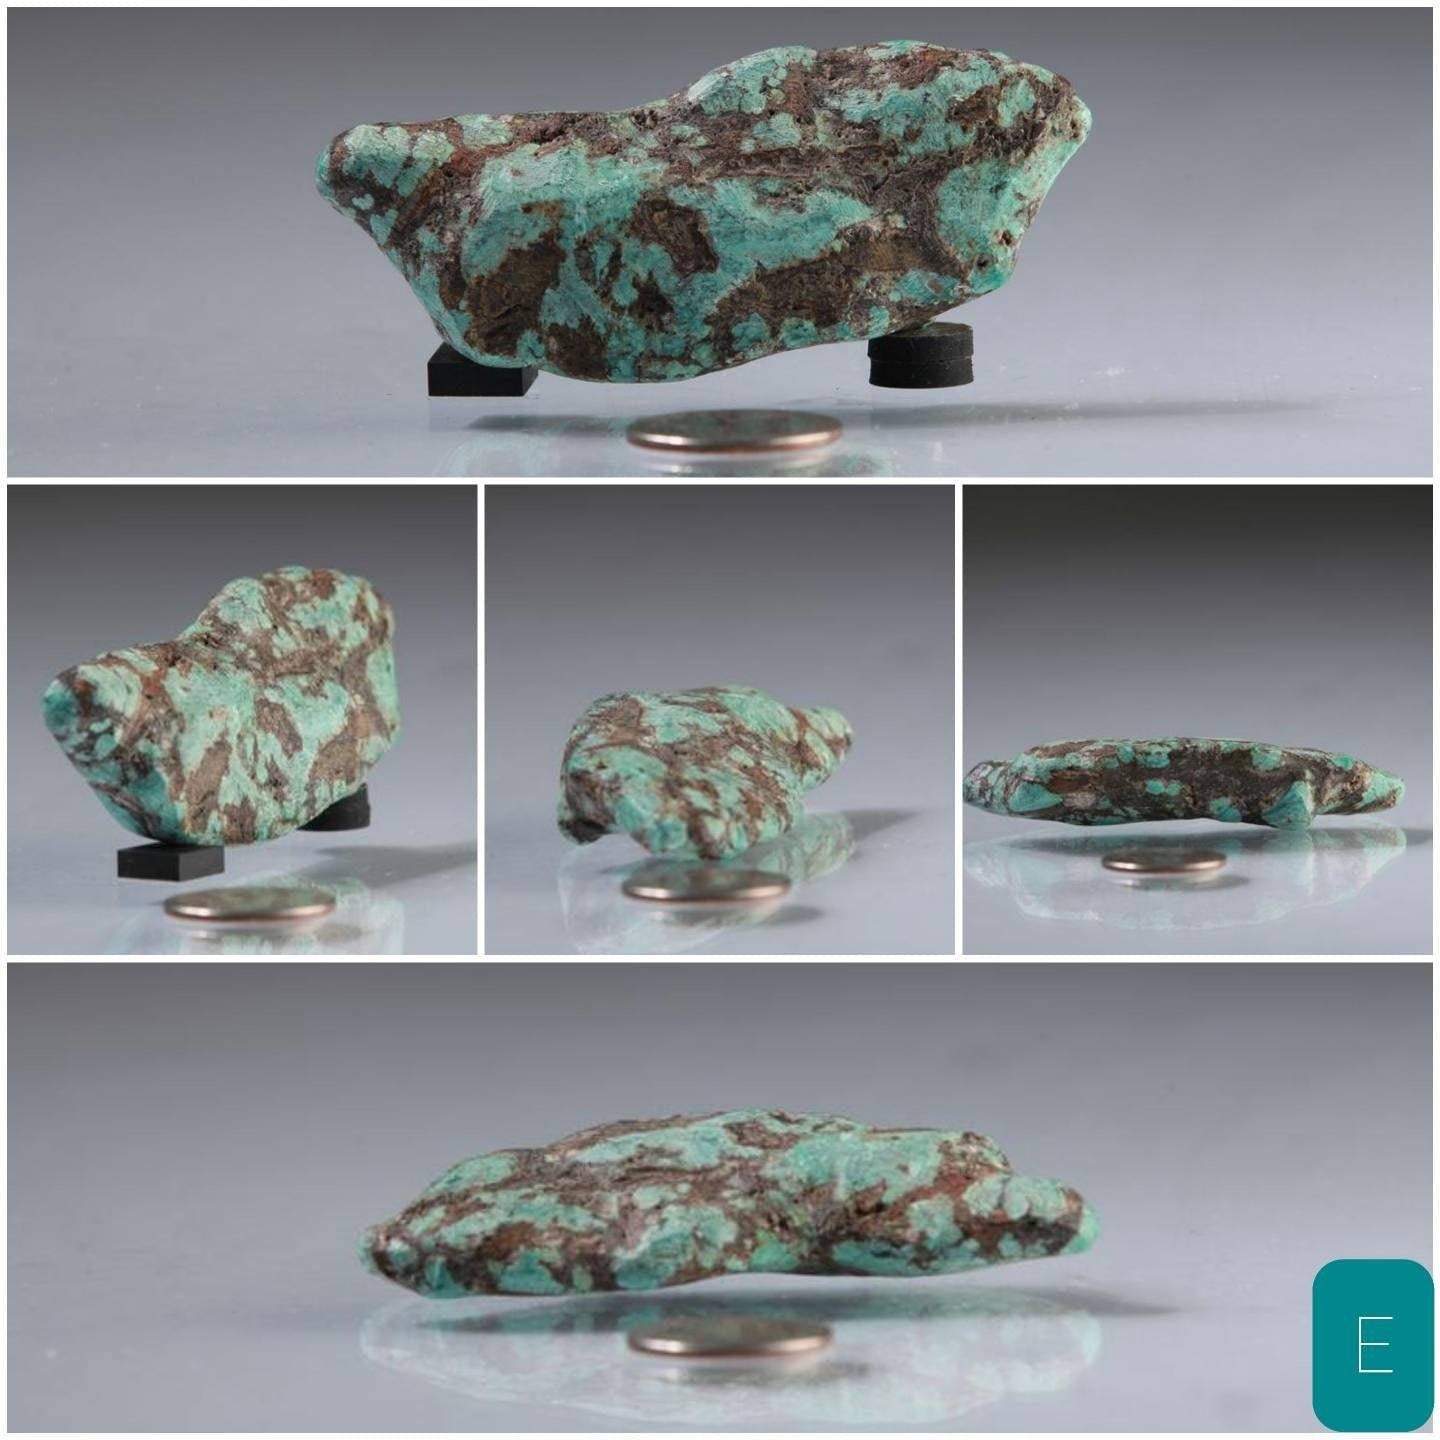 Natural Tibetan Turquoise Rough Uncut Rock Mineral Gemstone